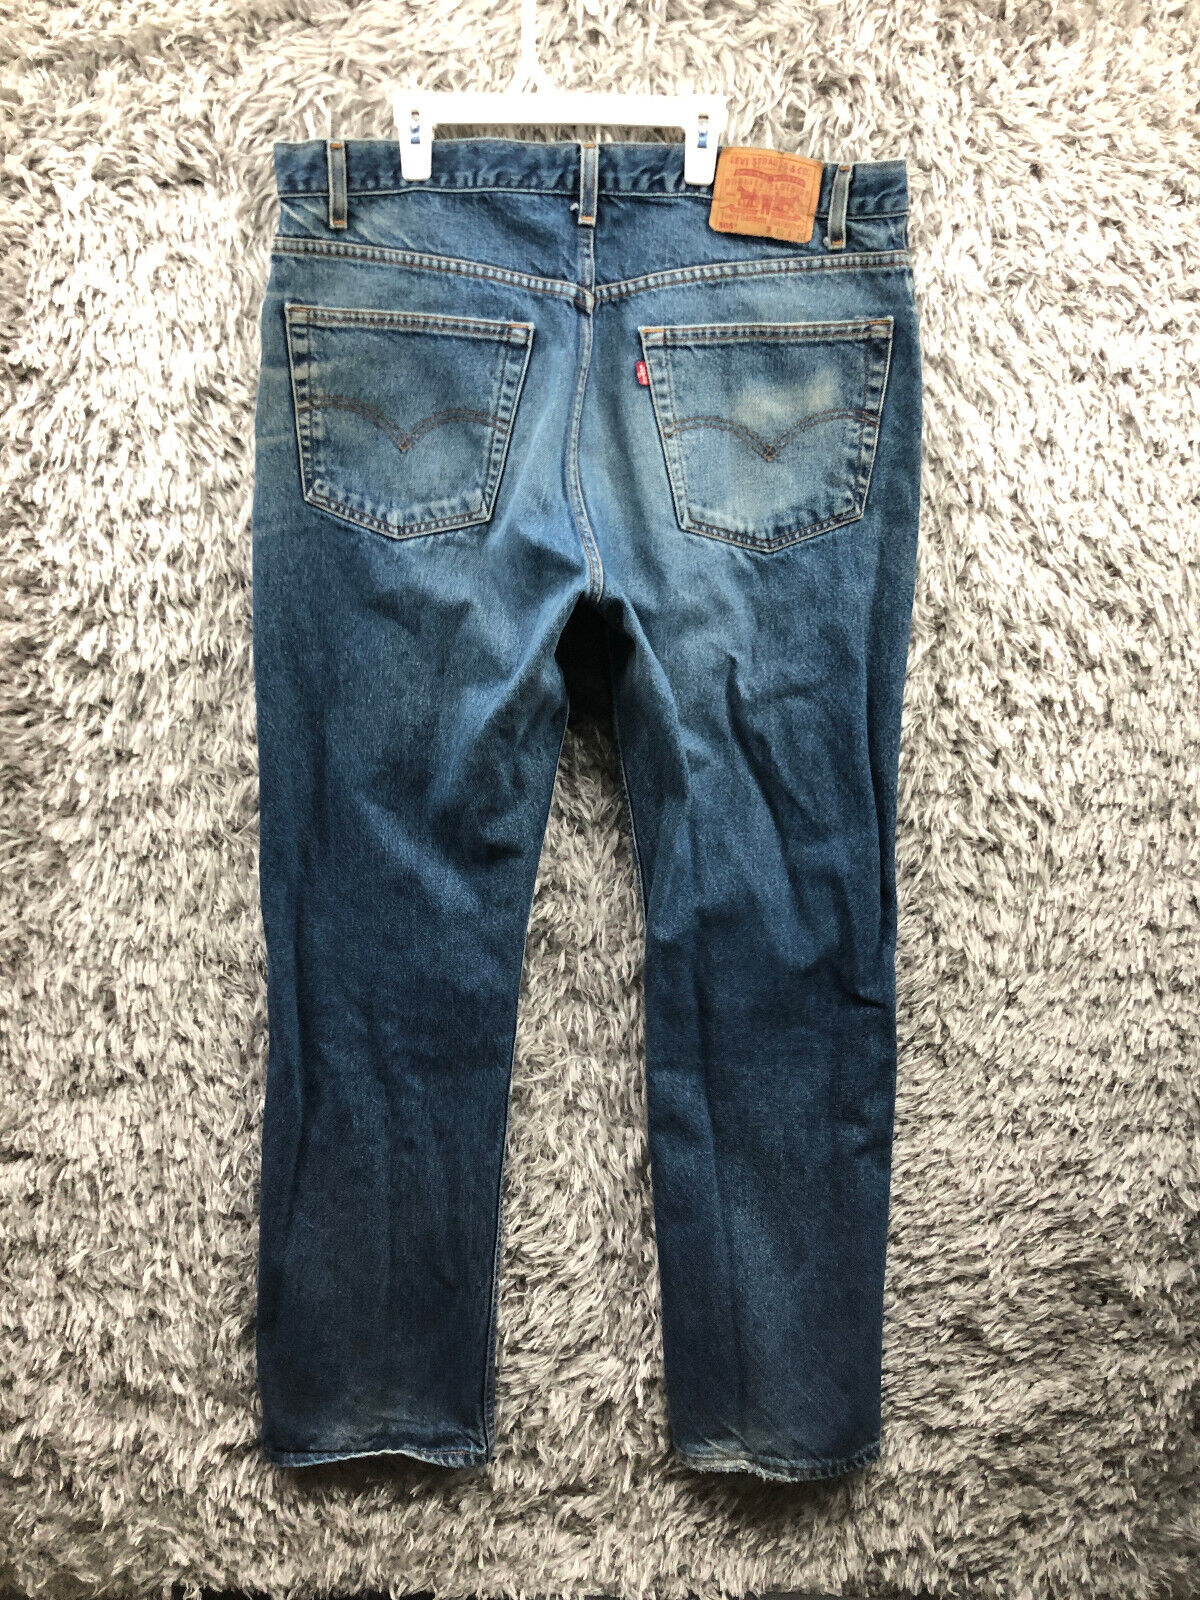 Levi's 505 Jeans Size 40x32 Mens Mid Rise Straight Leg Dark Wash Blue Denim  | eBay